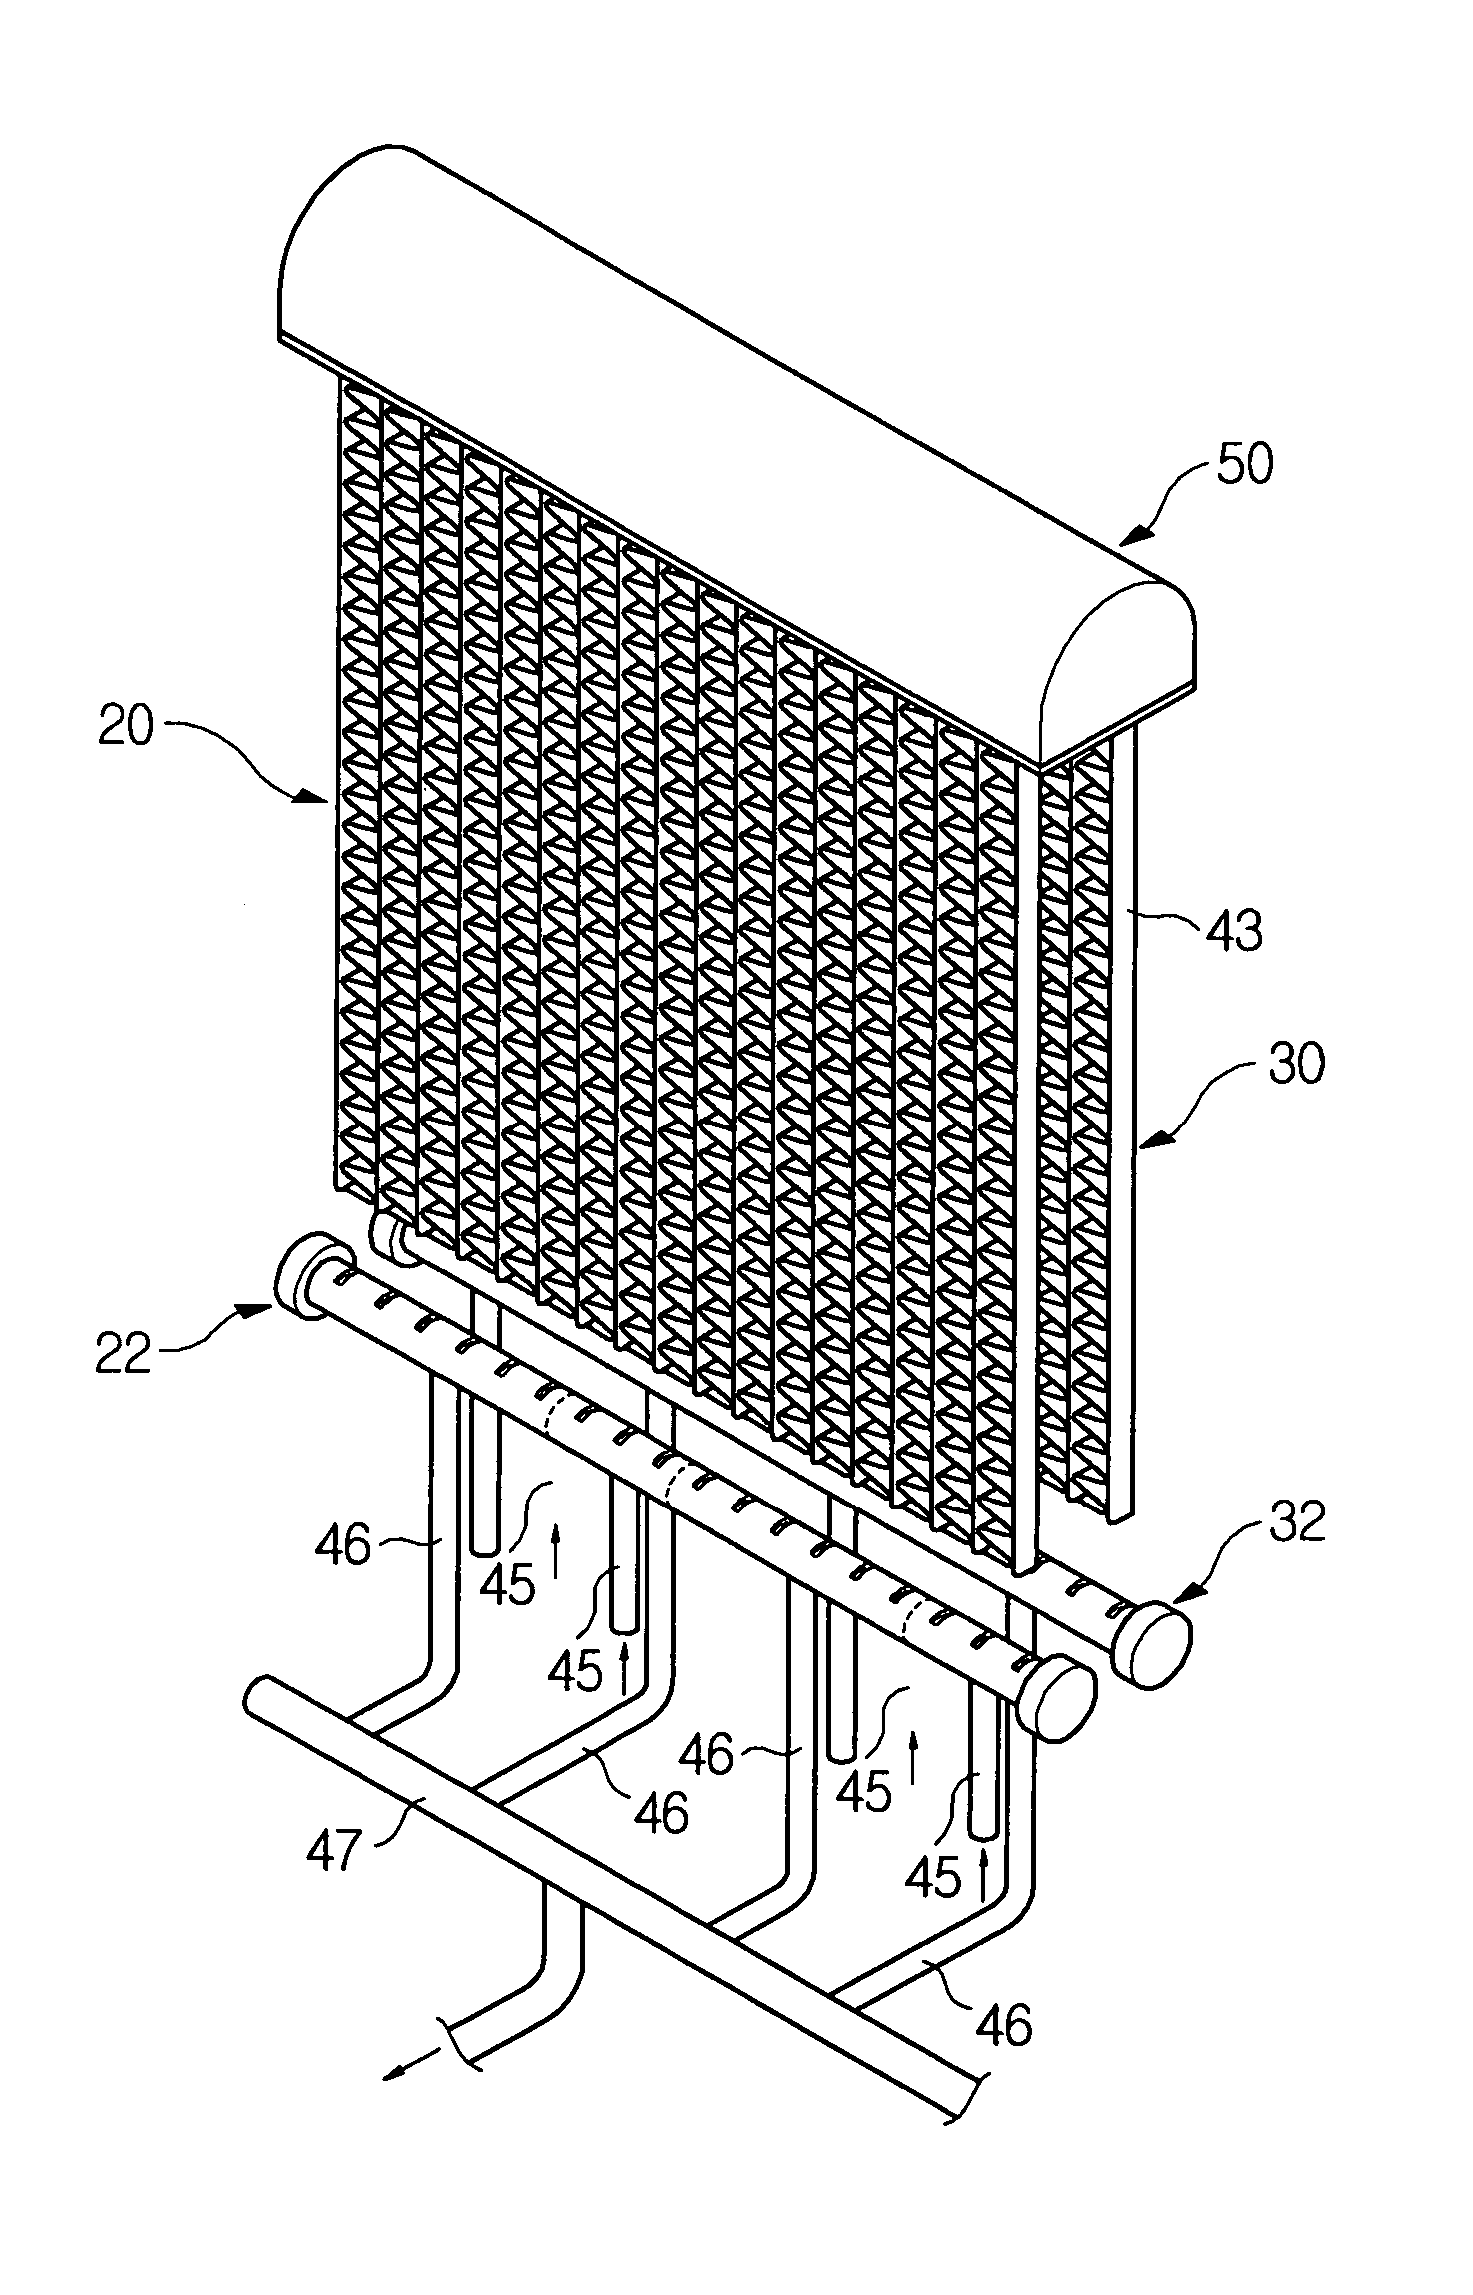 Evaporator using micro-channel tubes